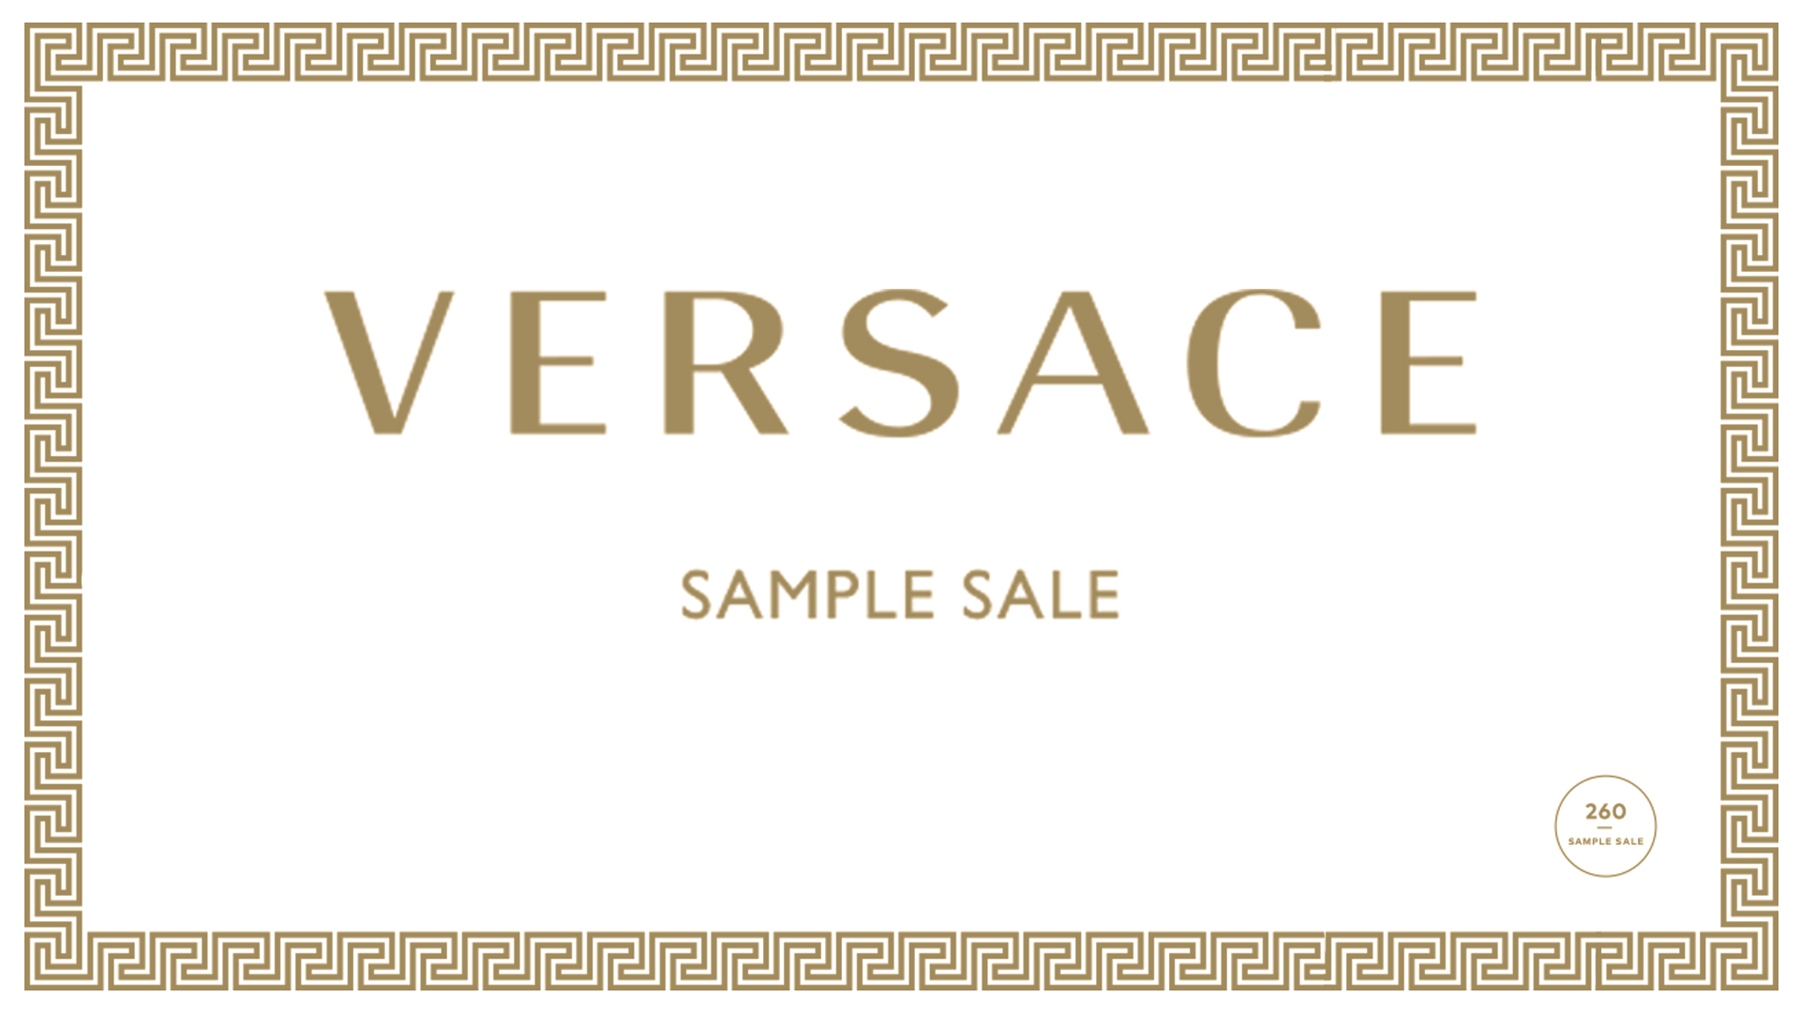 SHOPPING NYC: Versace Versace Versace Sample Sale